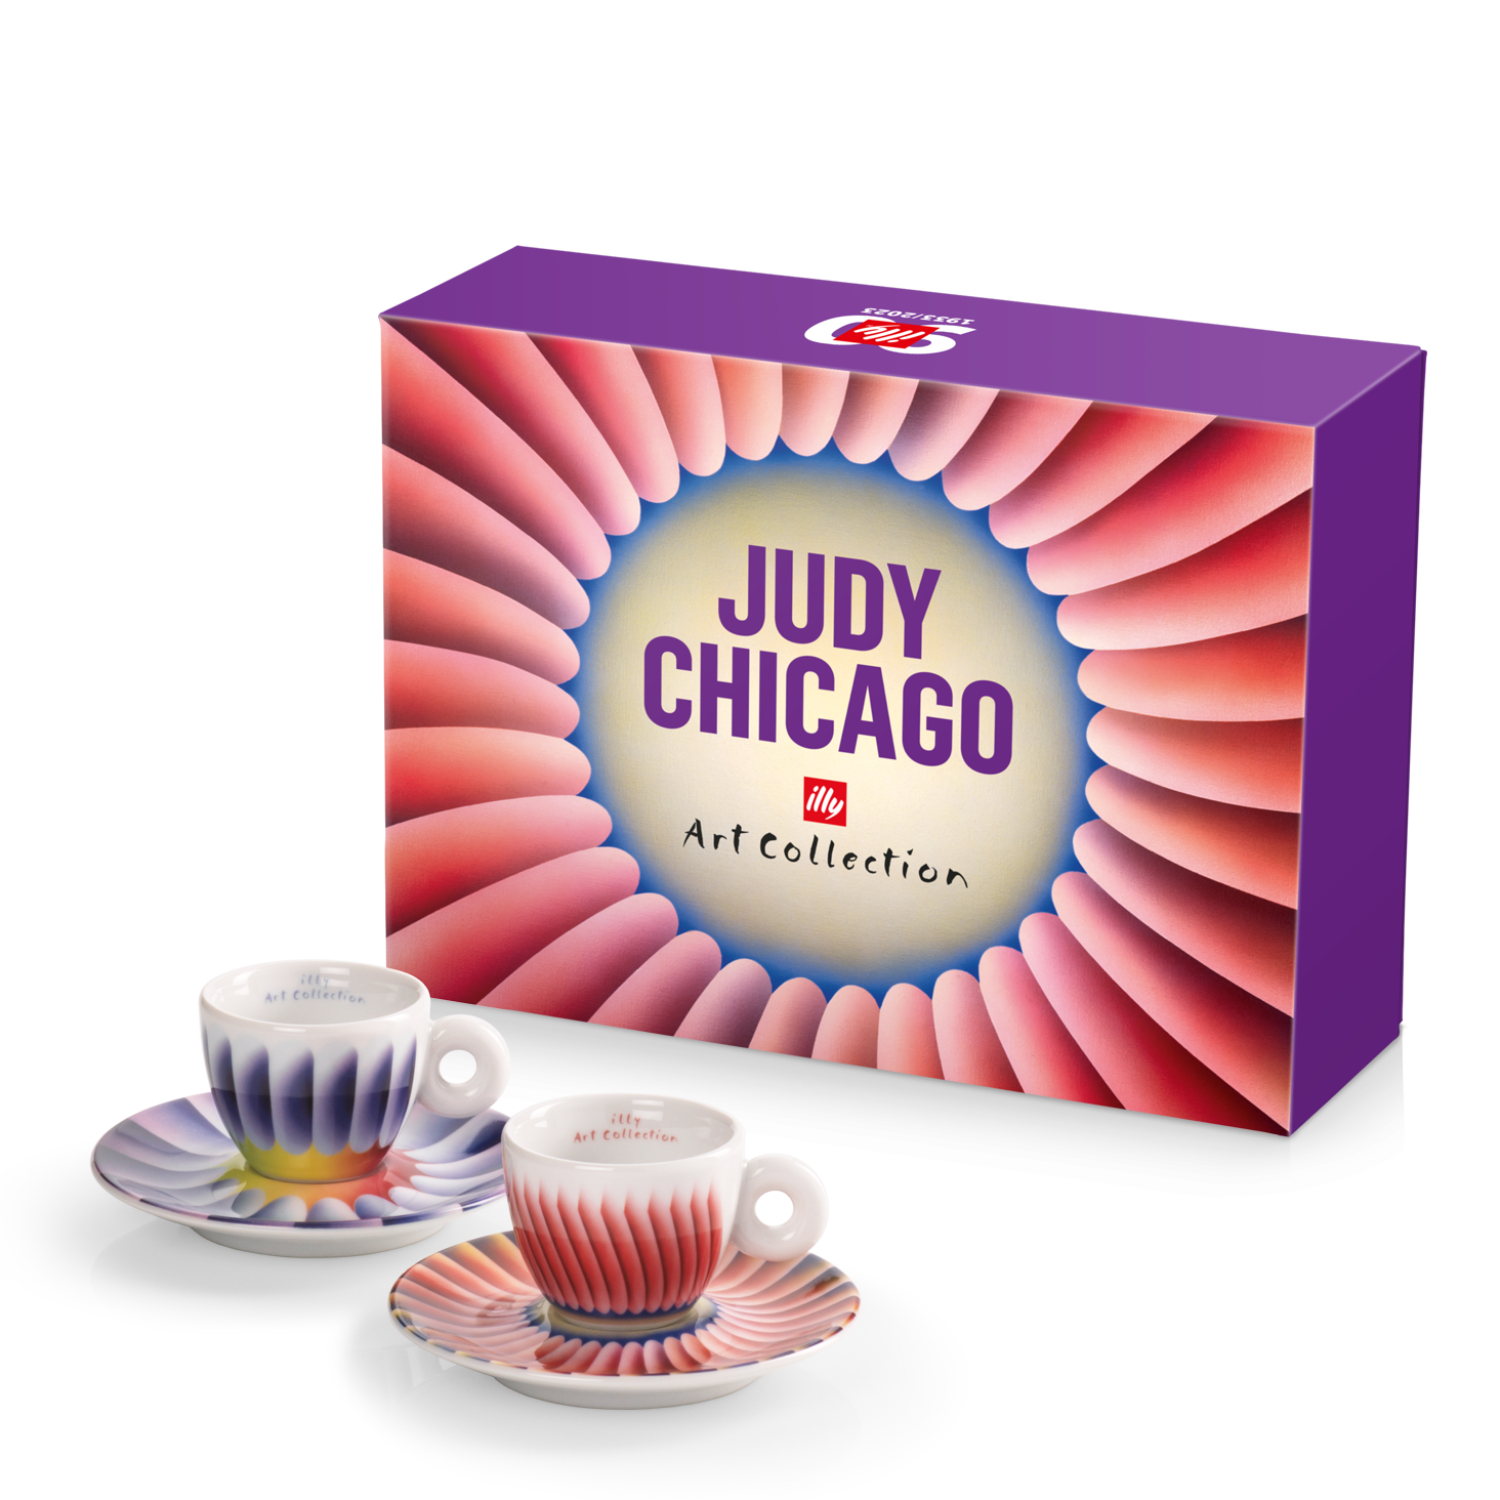 illy Art Collection JUDY CHICAGO Σετ Δώρου 2 Espresso Cups, Φλιτζάνια , 02-02-2015